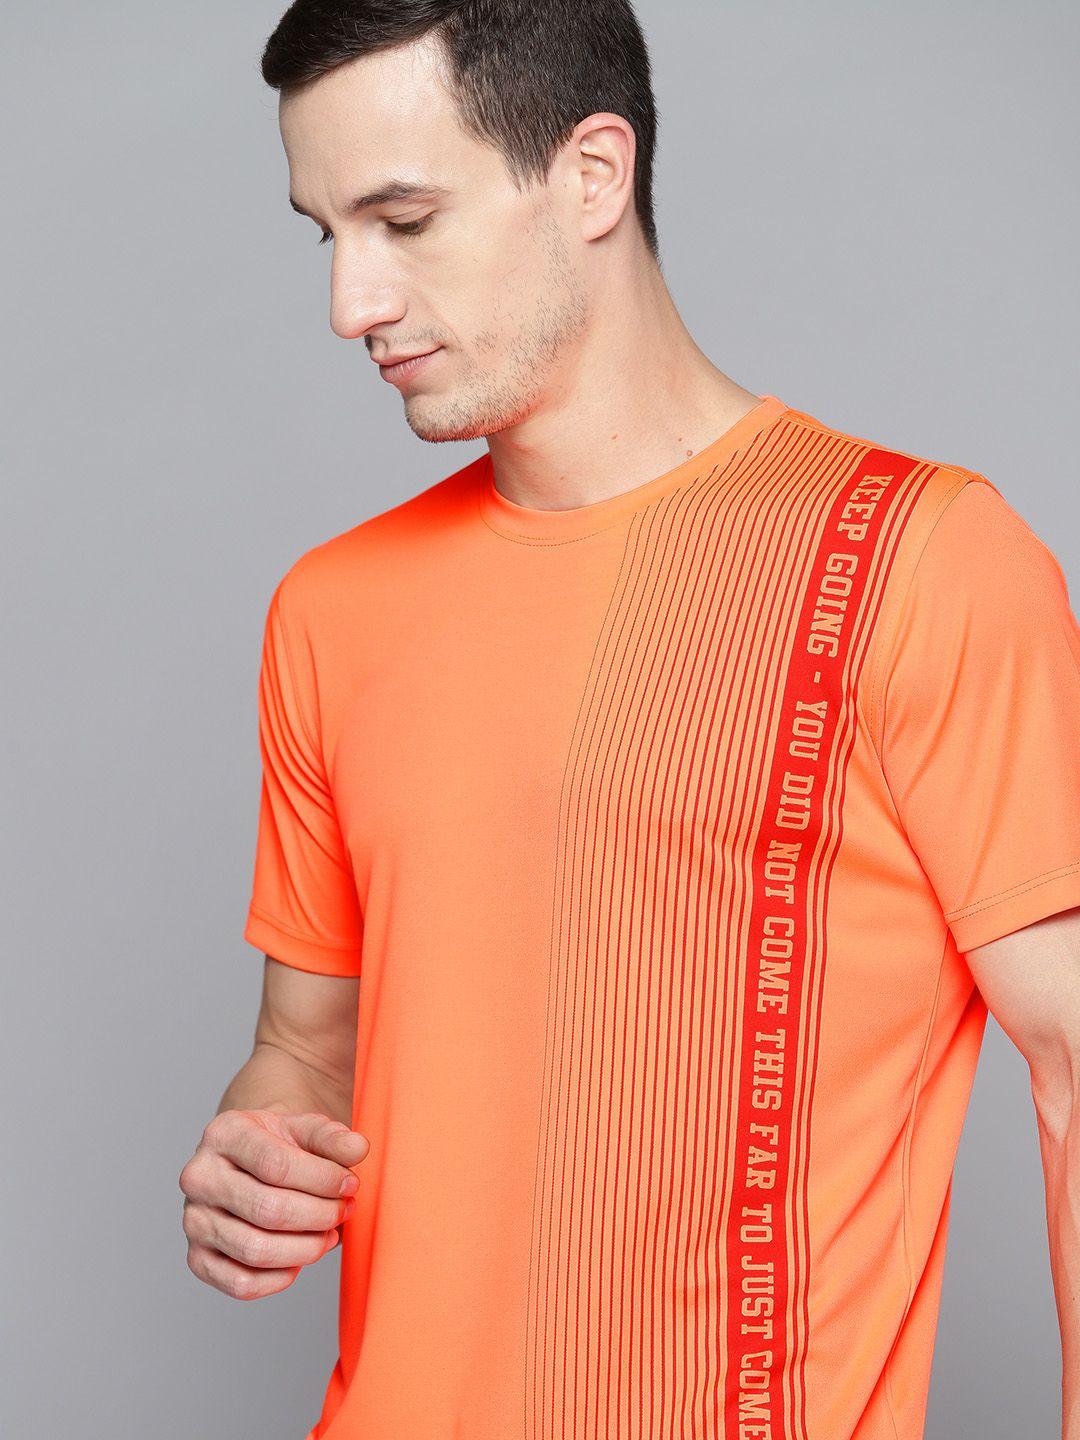 hrx by hrithik roshan training men neon orange rapid-dry typography tshirt